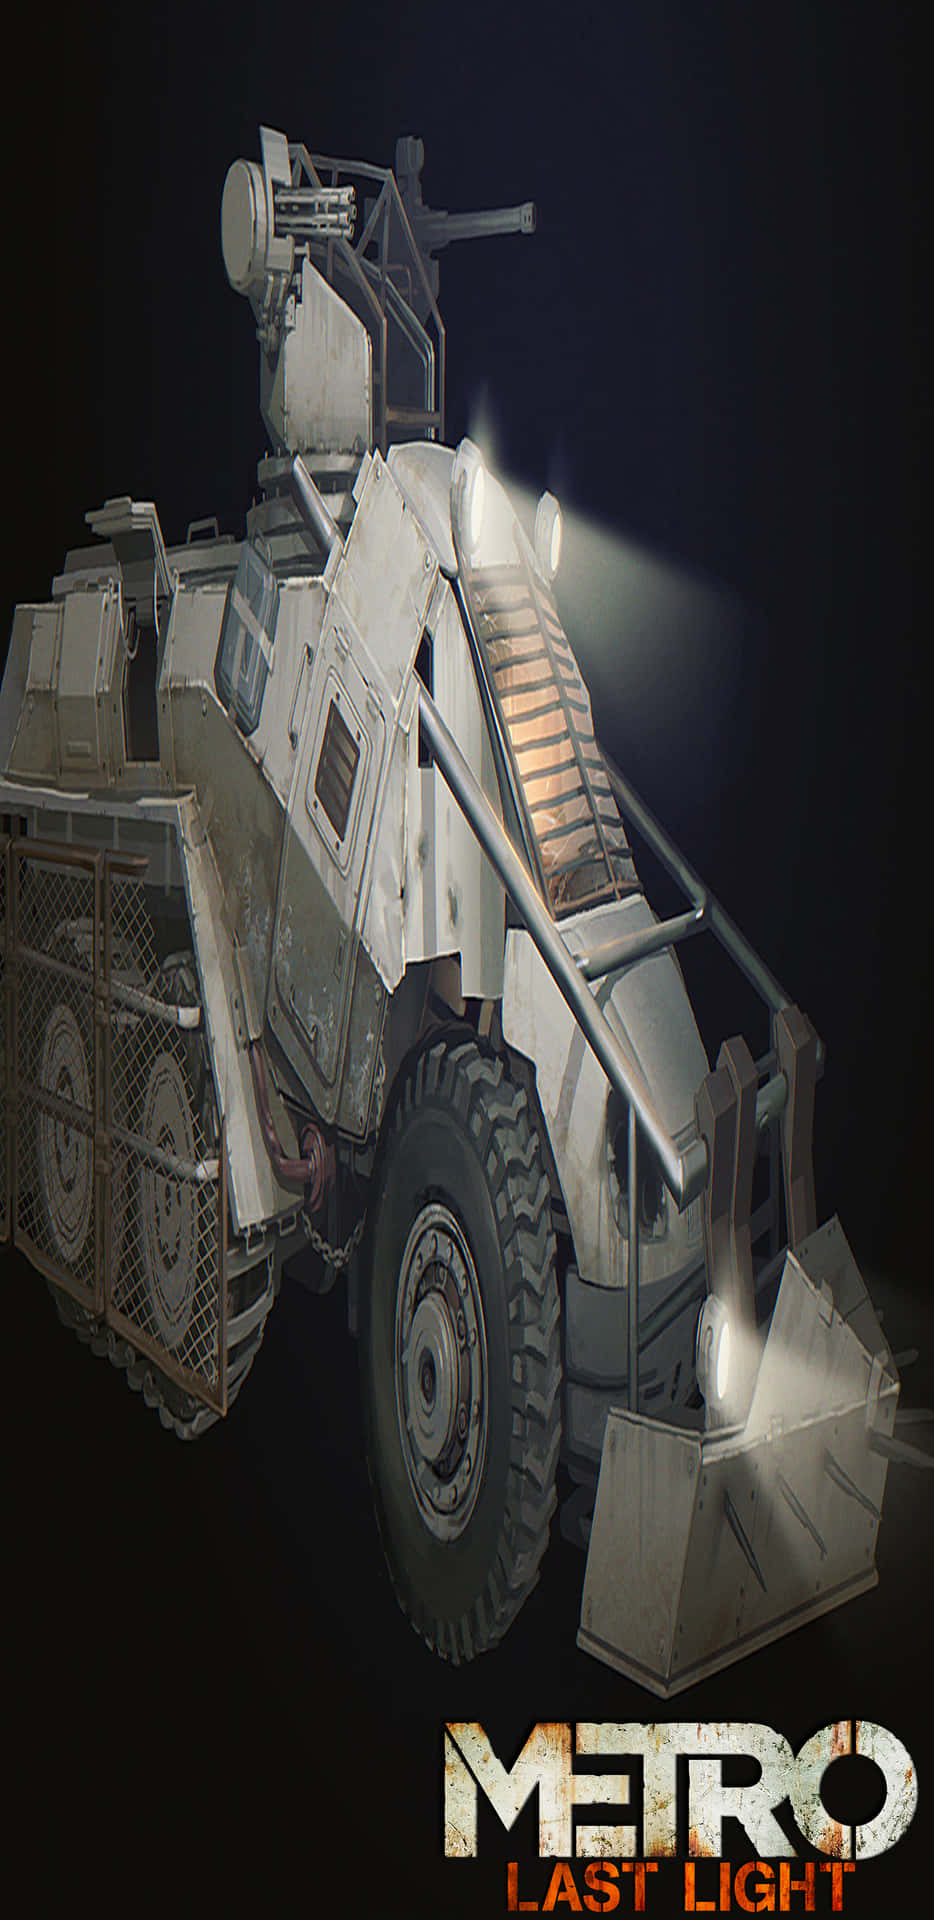 Pixel3xl Bakgrundsbild Med Metro Last Light Armored Vehicle.